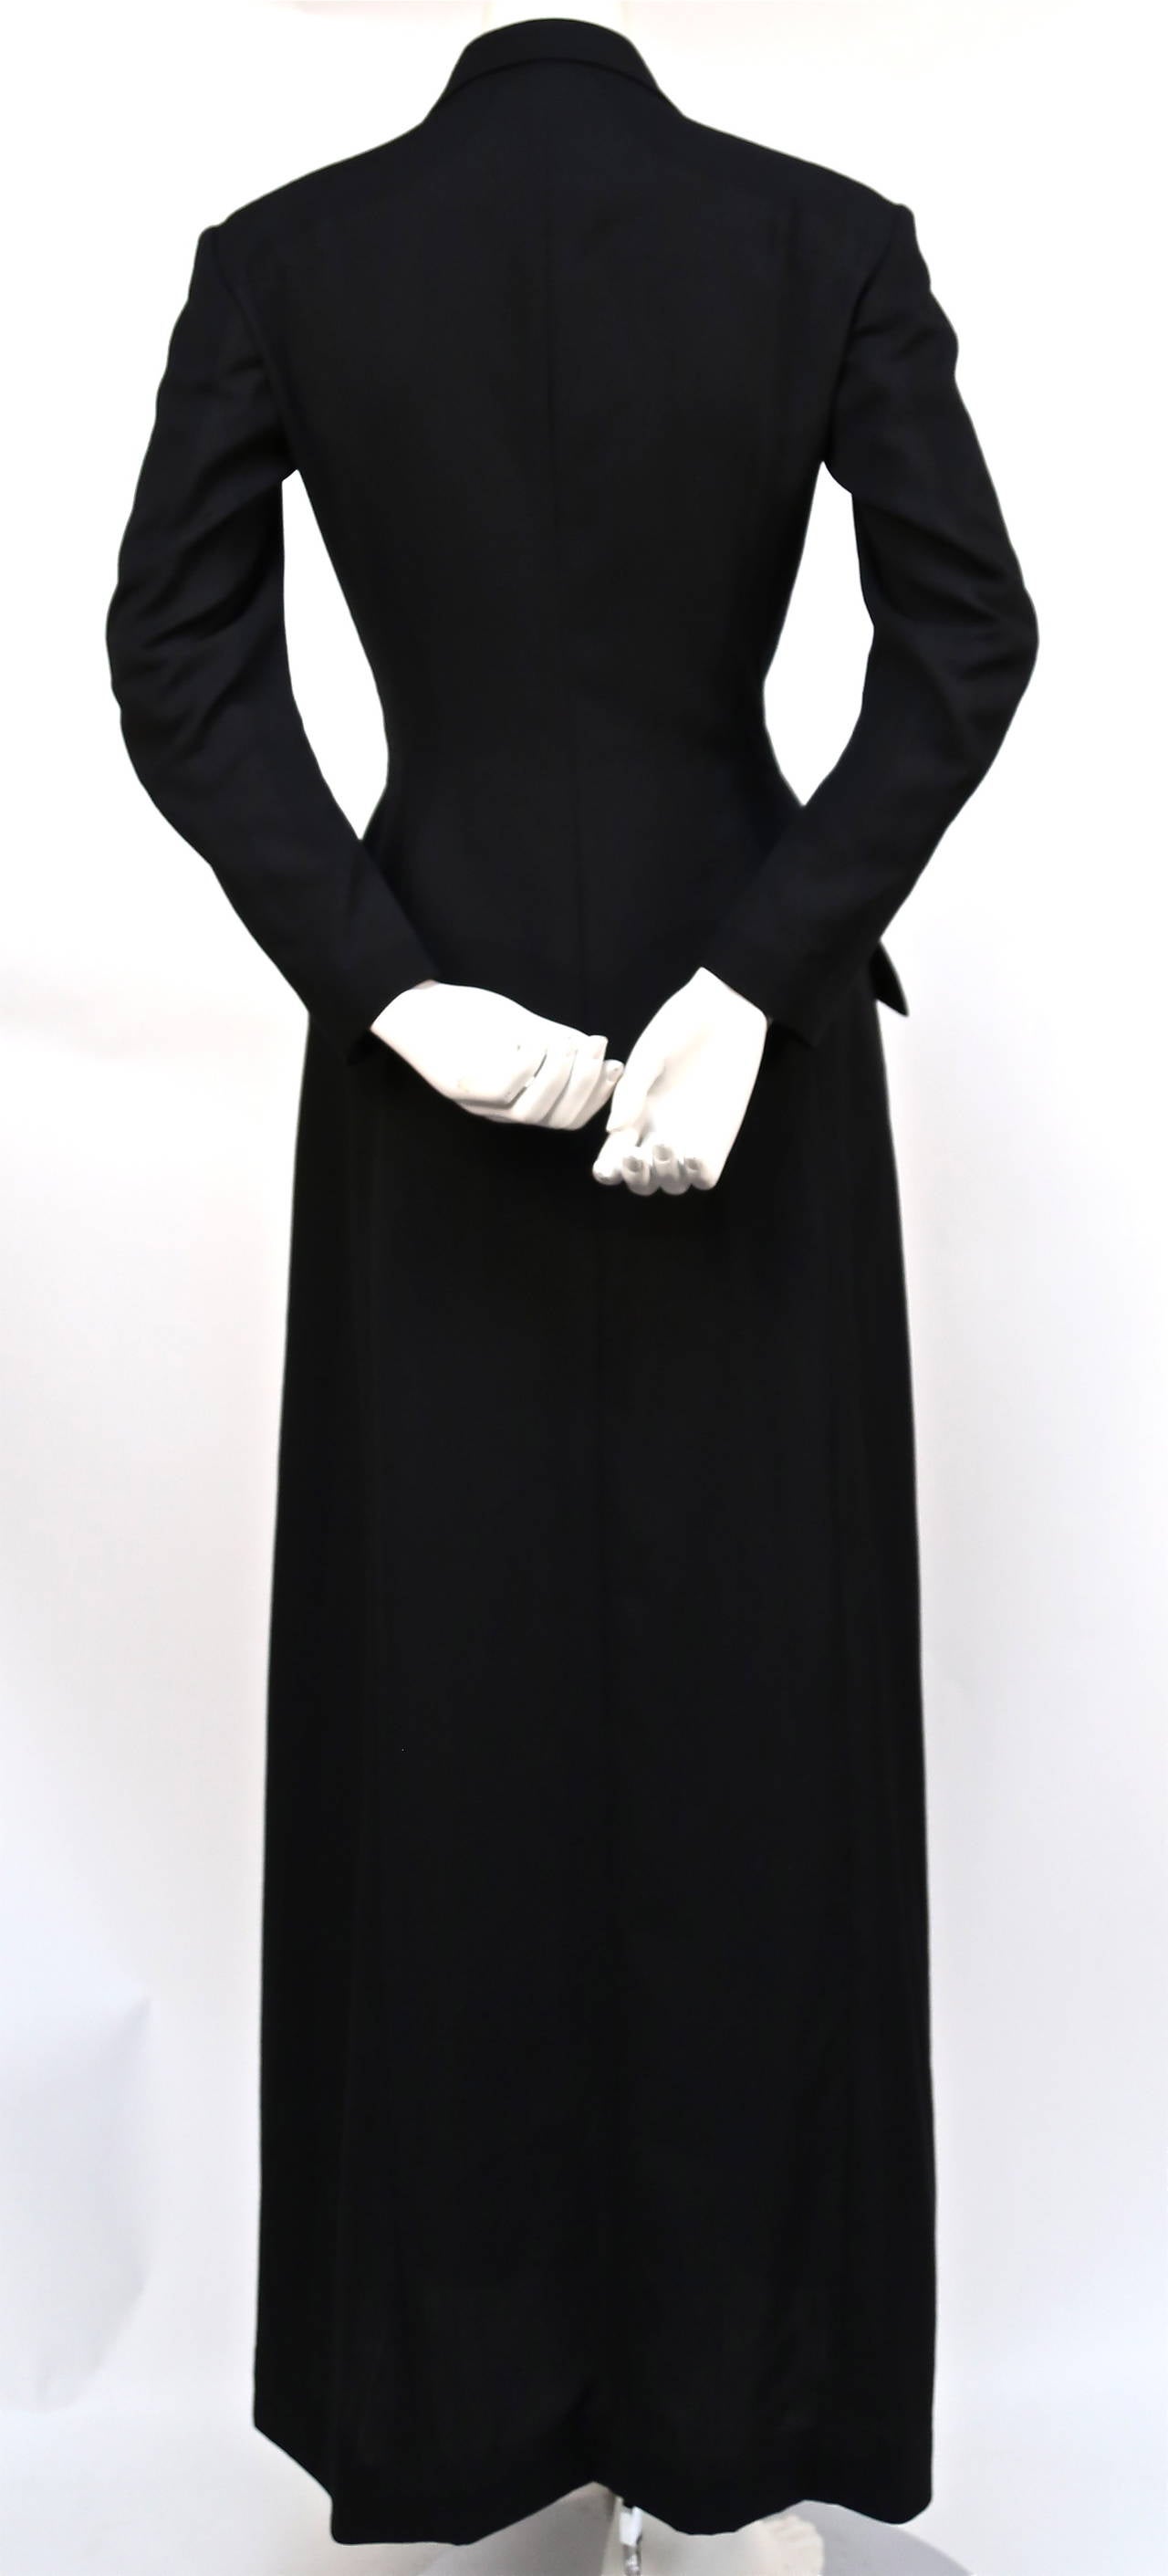 Women's 1980's YOHJI YAMAMOTO dramatic black fitted dress coat with rose brooch